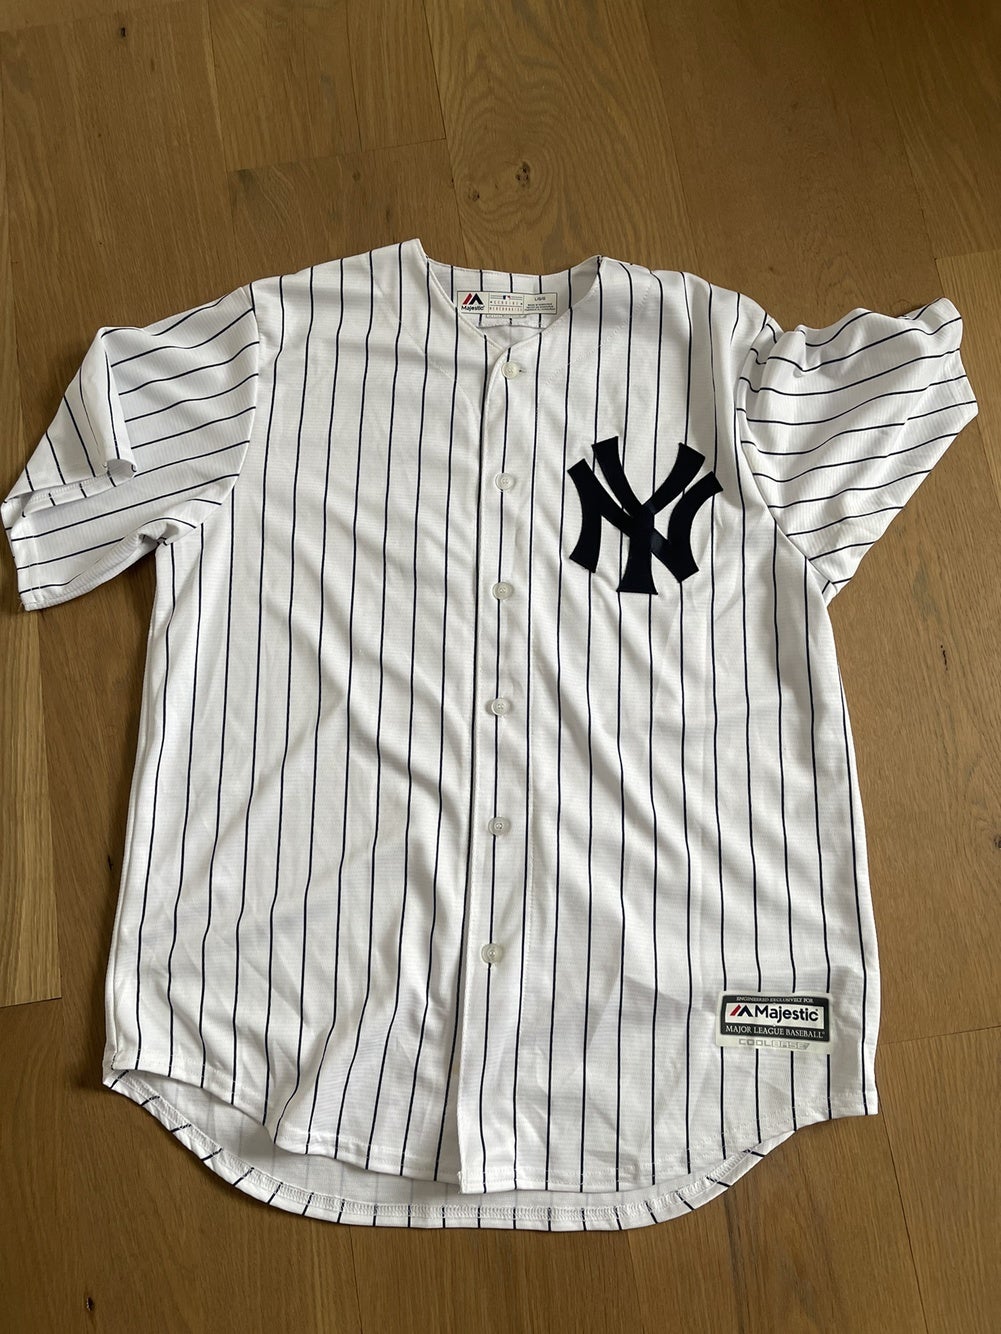 New York Yankees Home Men's Size Large Baseball Jersey